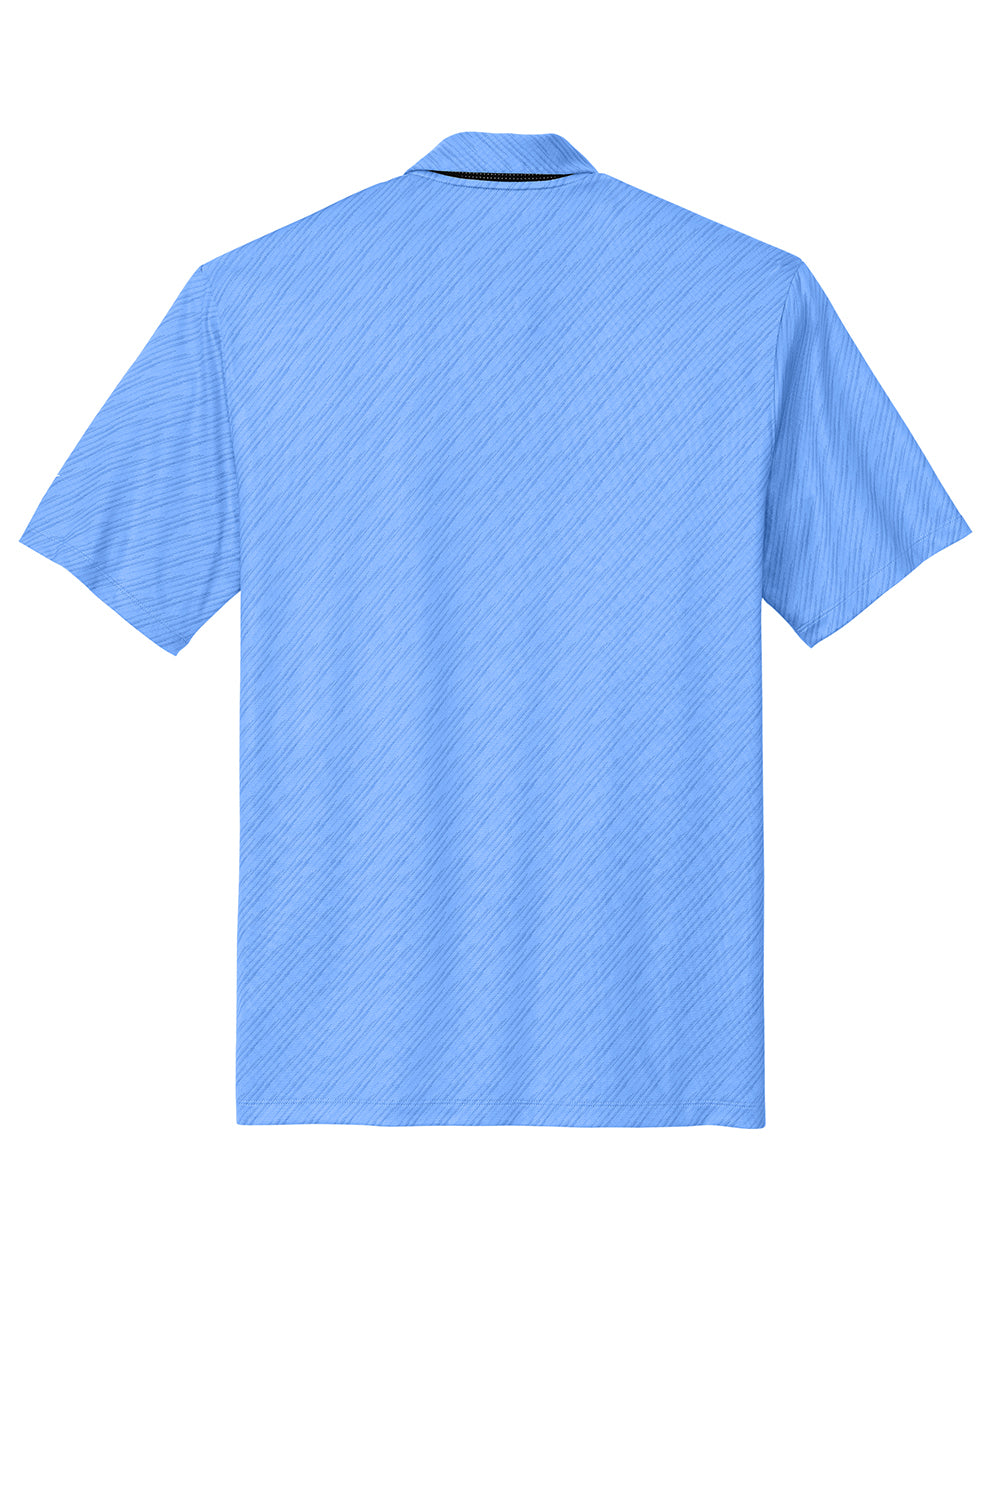 Nike NKDX6688 Mens Vapor Dash Dri-Fit Moisture Wicking Short Sleeve Polo Shirt Valor Blue Flat Back